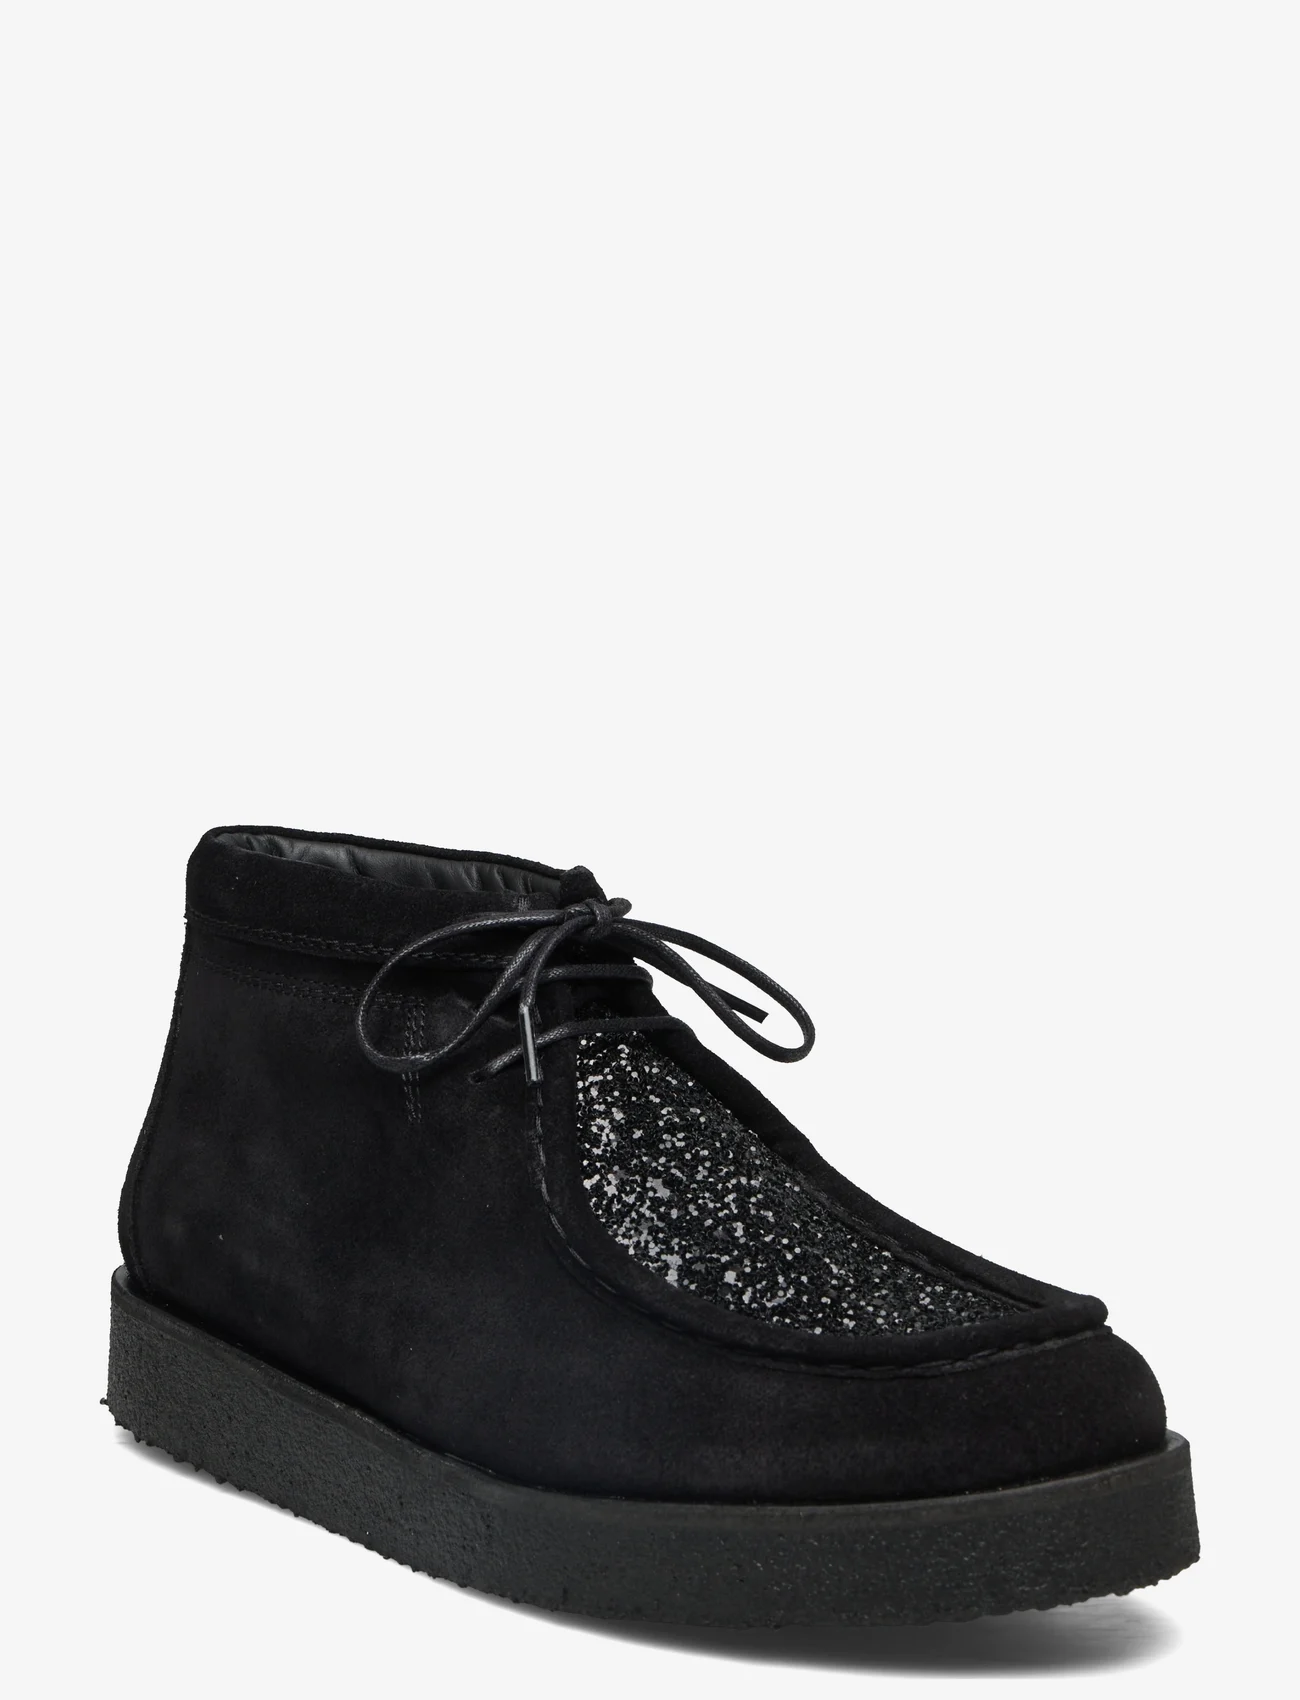 ANGULUS - Shoes - flat - with lace - płaskie buty - 1163/2486 black/black glitter - 0